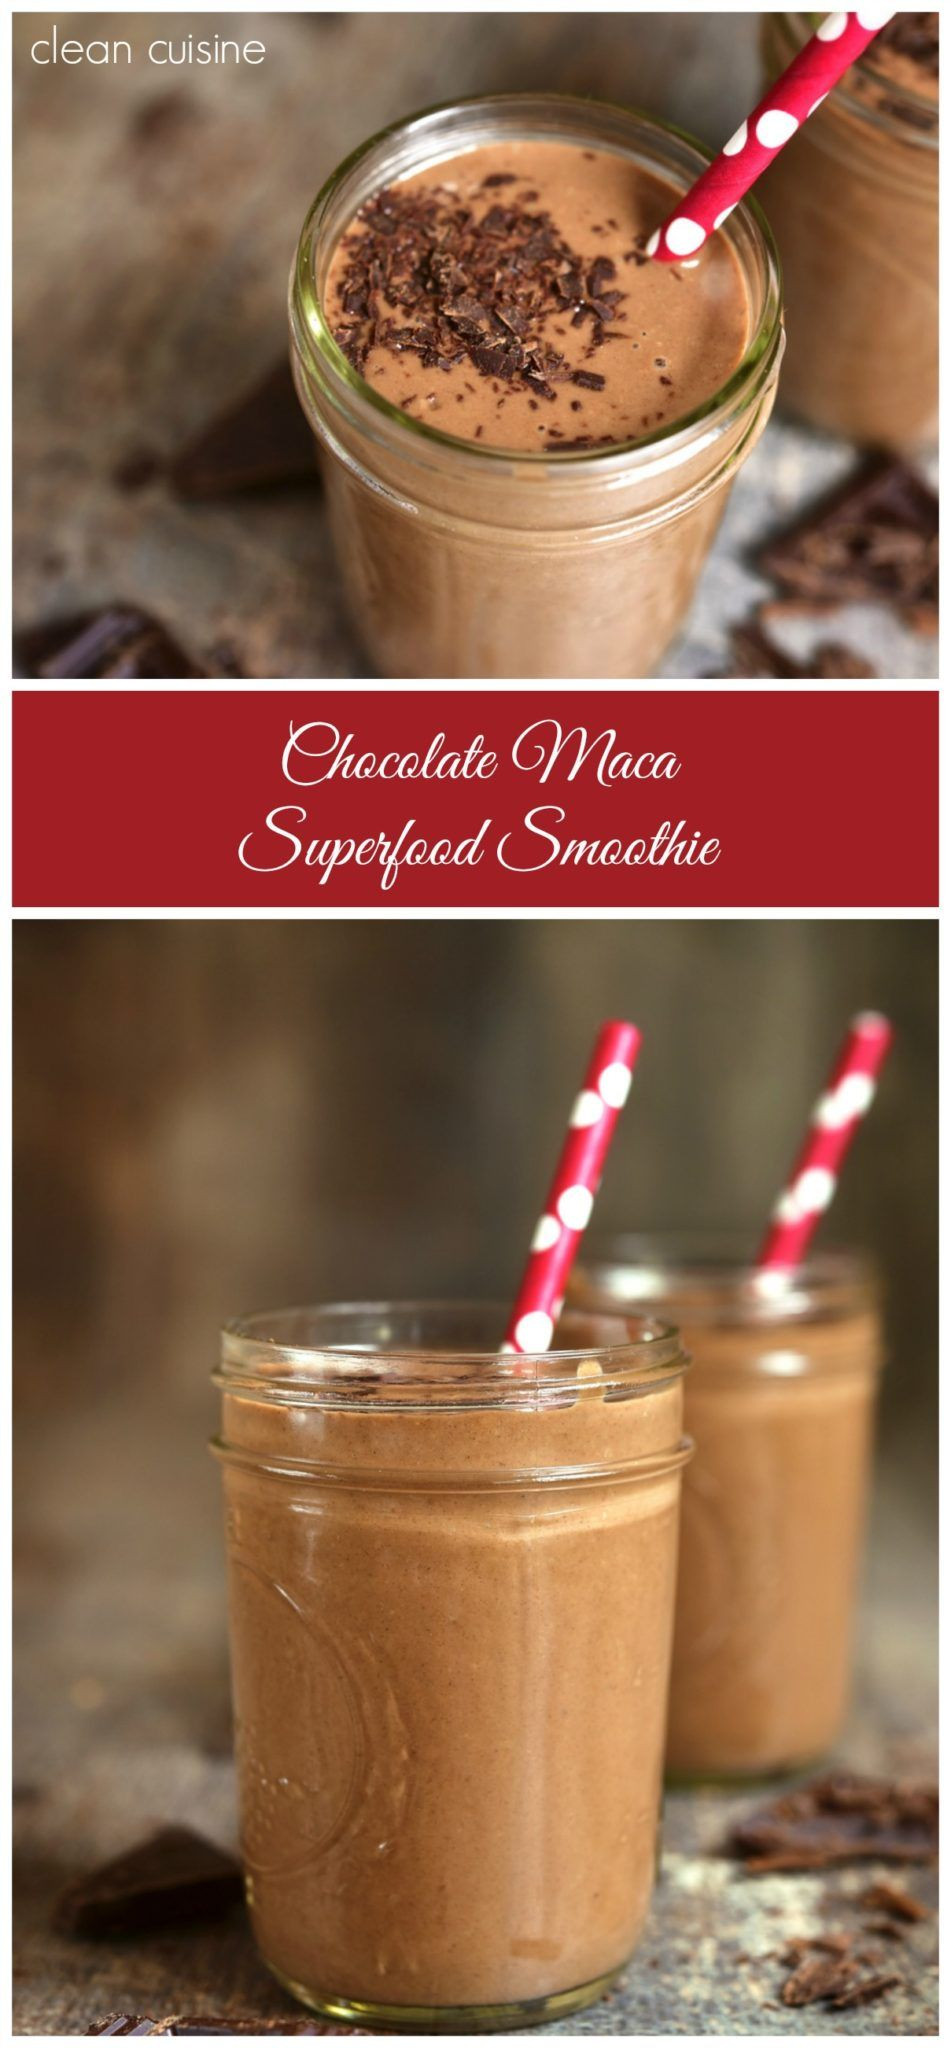 Superfood Smoothie Recipes
 Chocolate Maca Superfood Smoothie Recipe